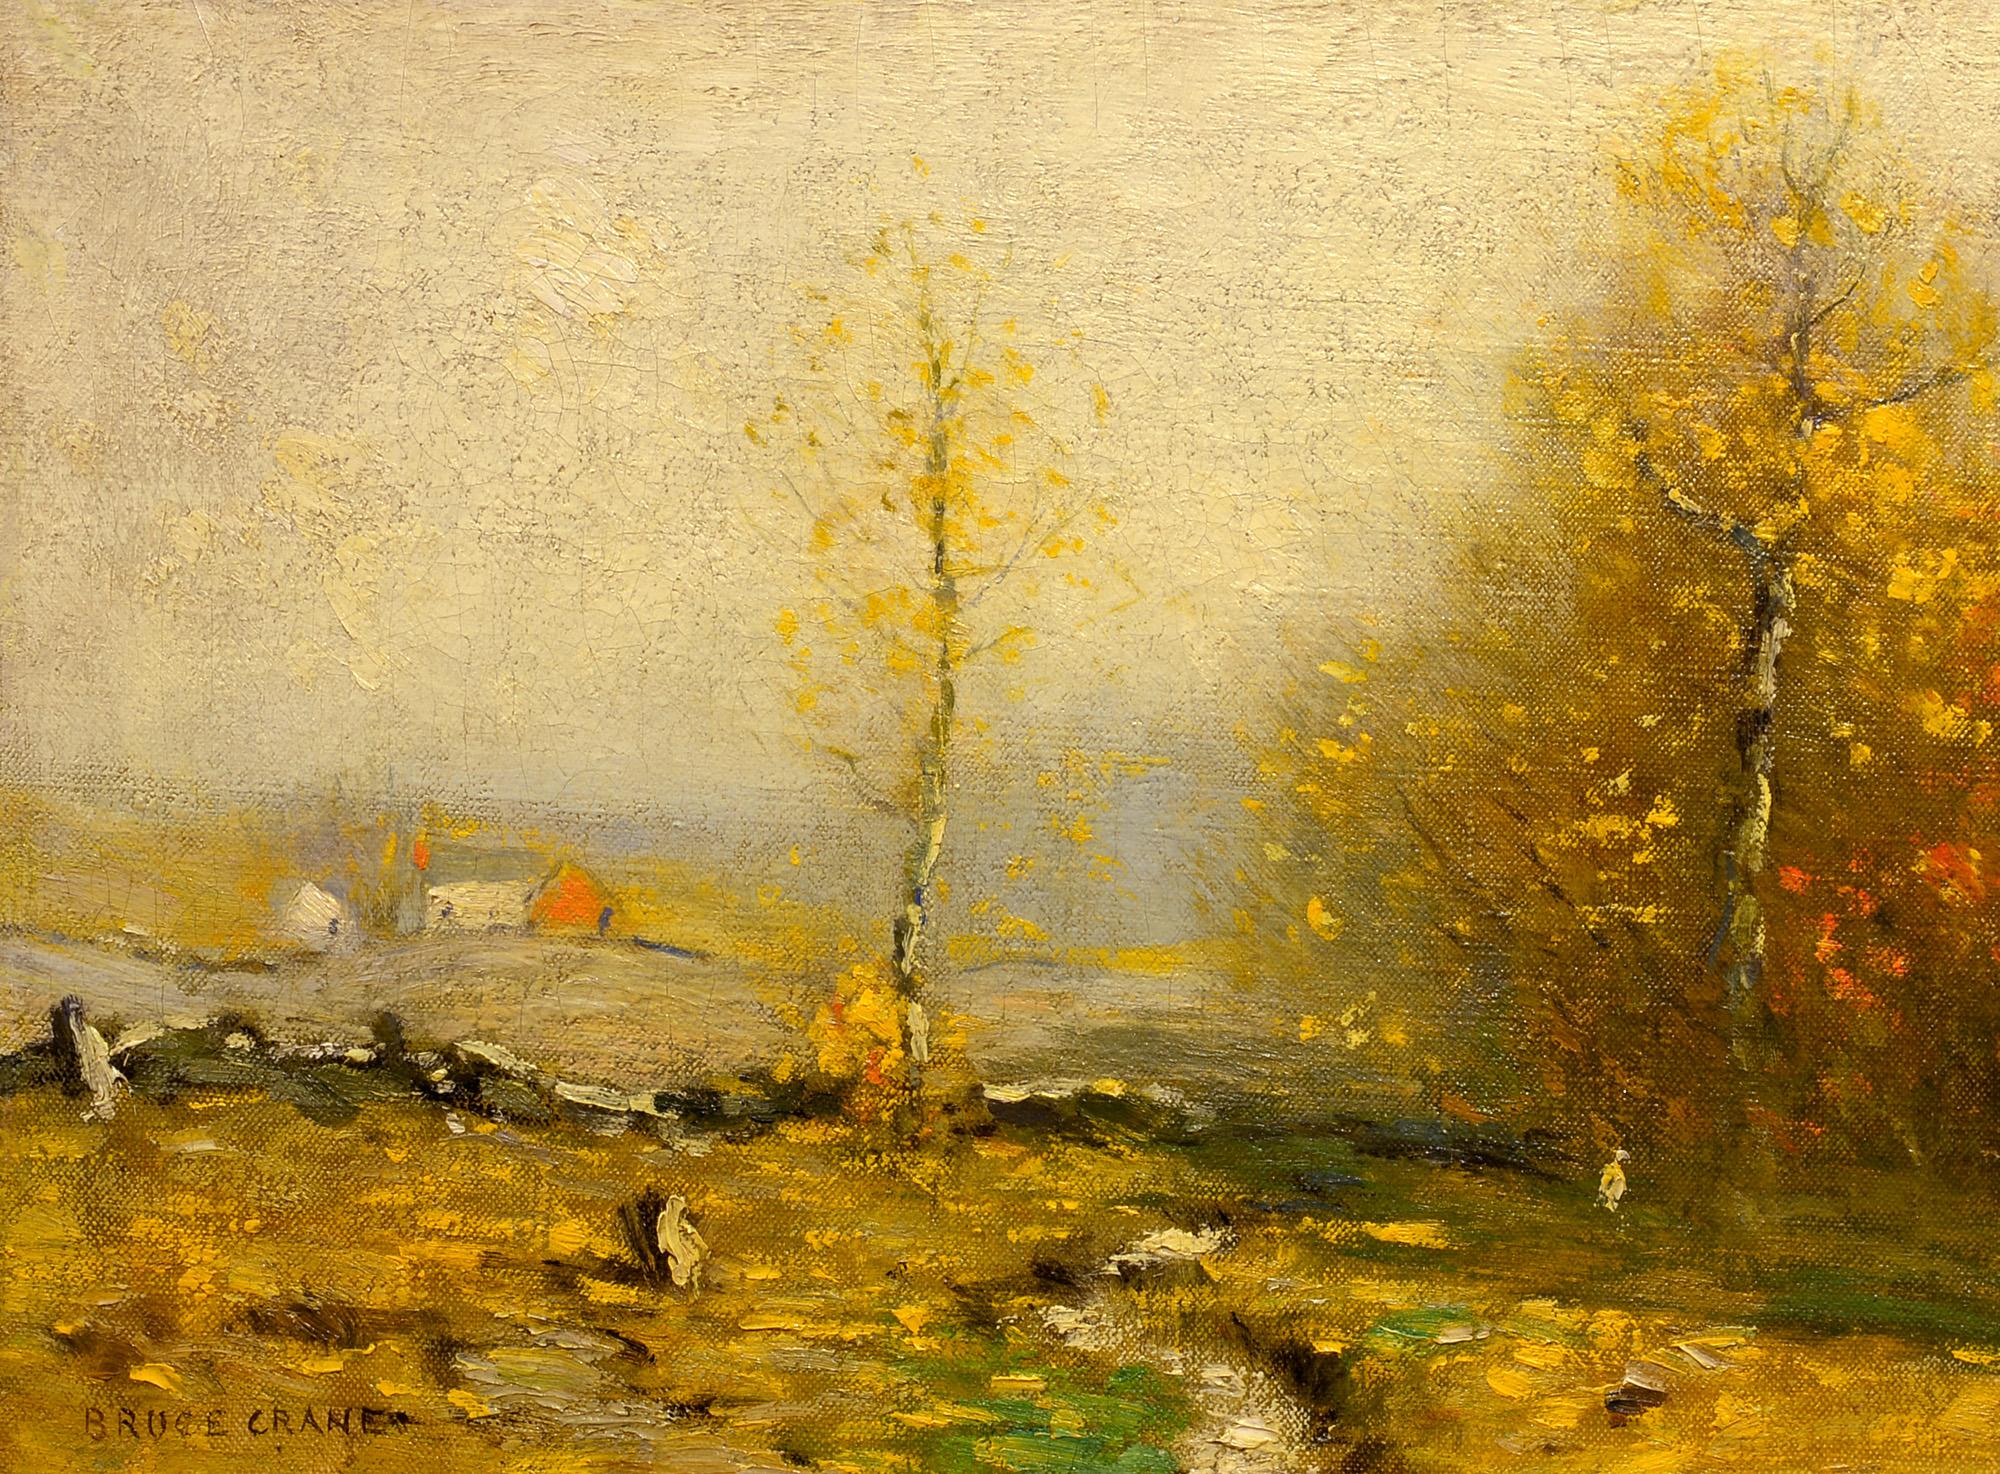 Bruce Crane Landscape Painting - Homestead in Autumn